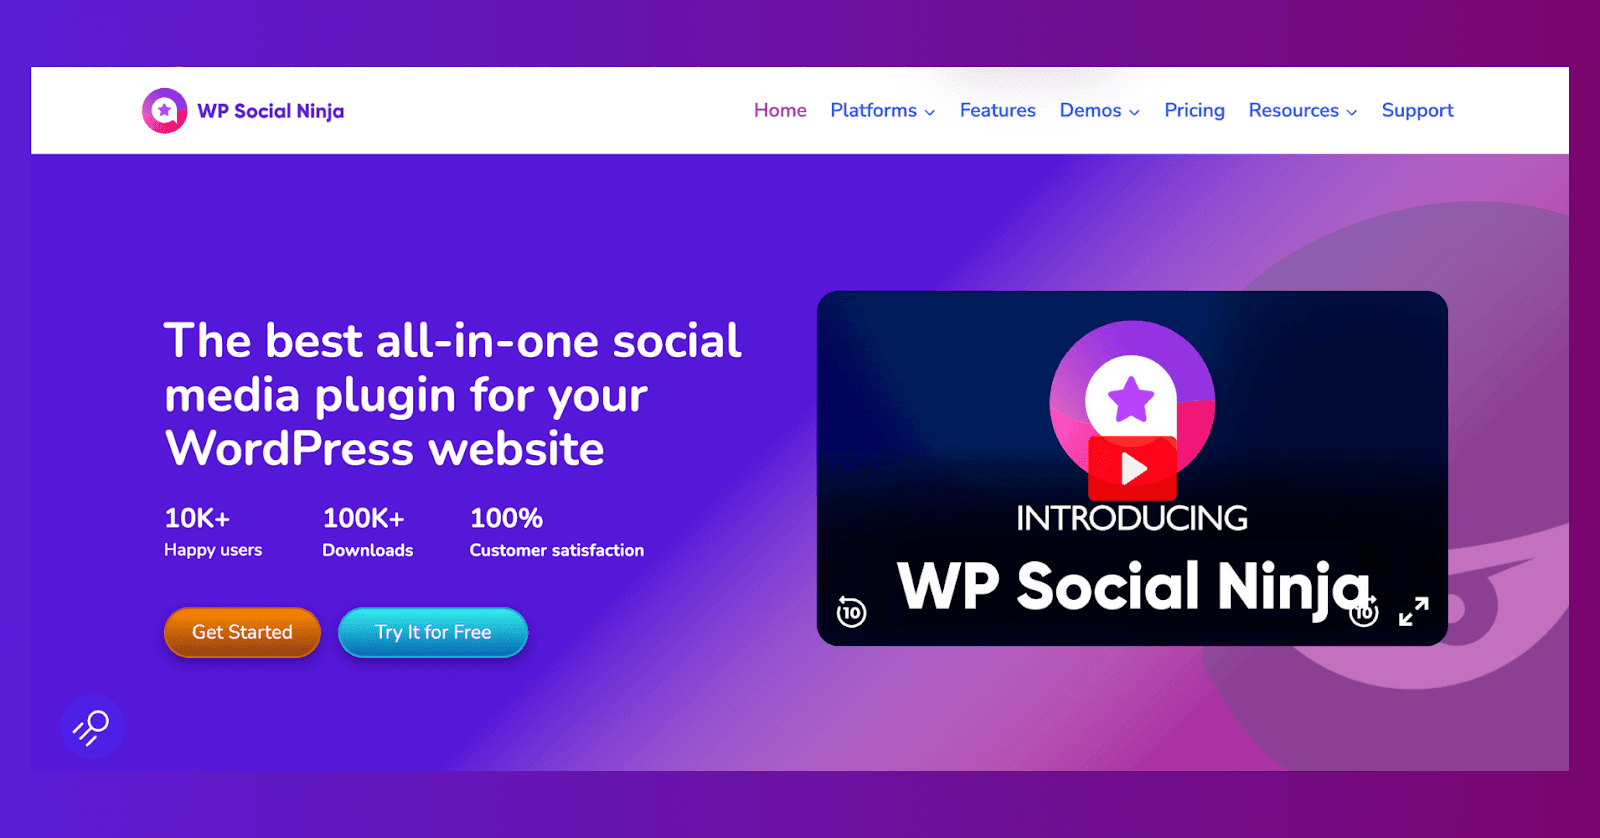 WP Social Ninja, an all-in-one social media plugin.